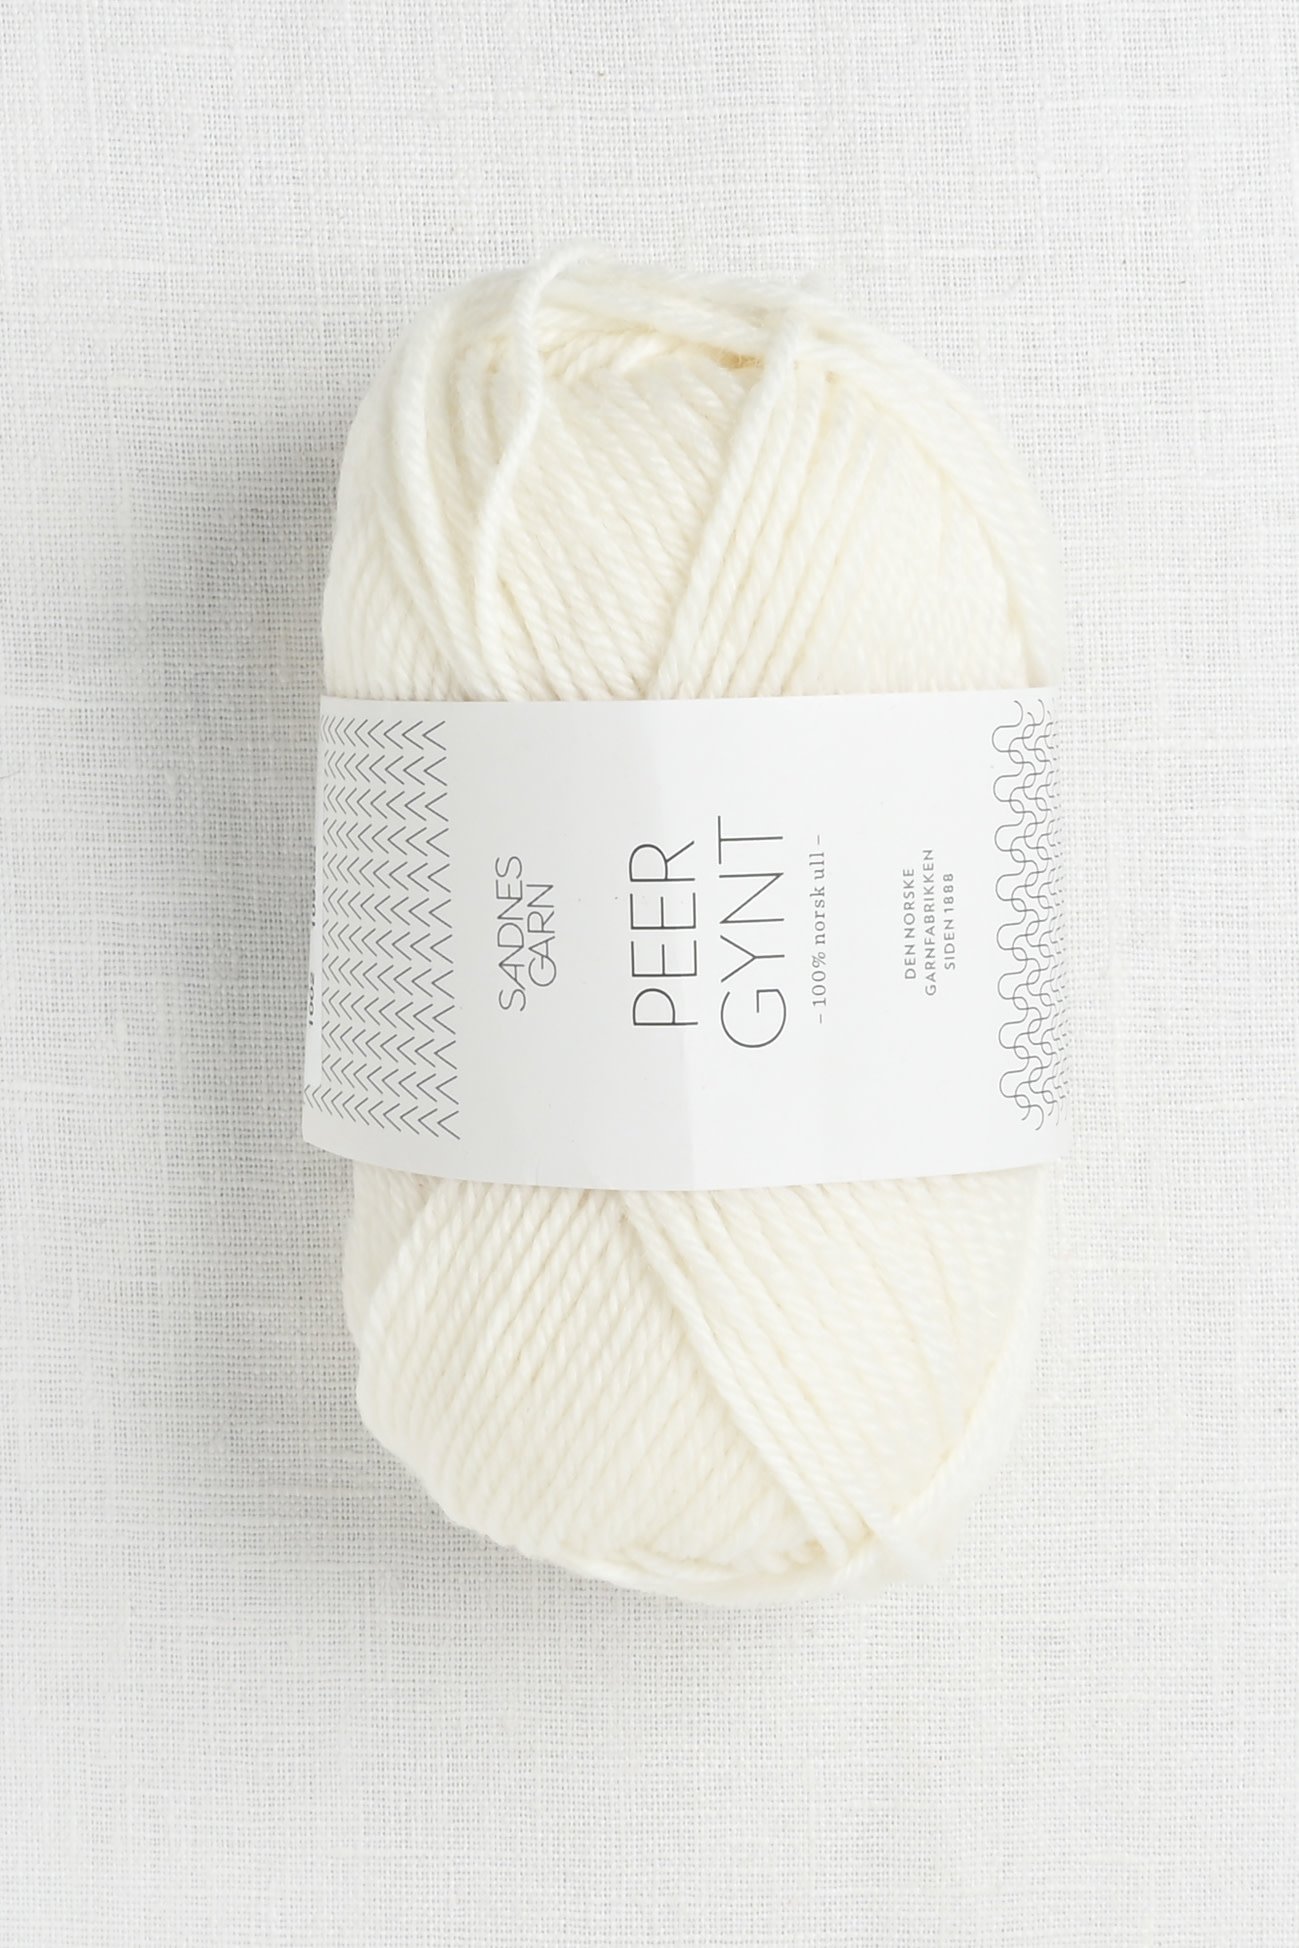 Sandnes Peer Gynt 1002 White - Wool and Company Fine Yarn